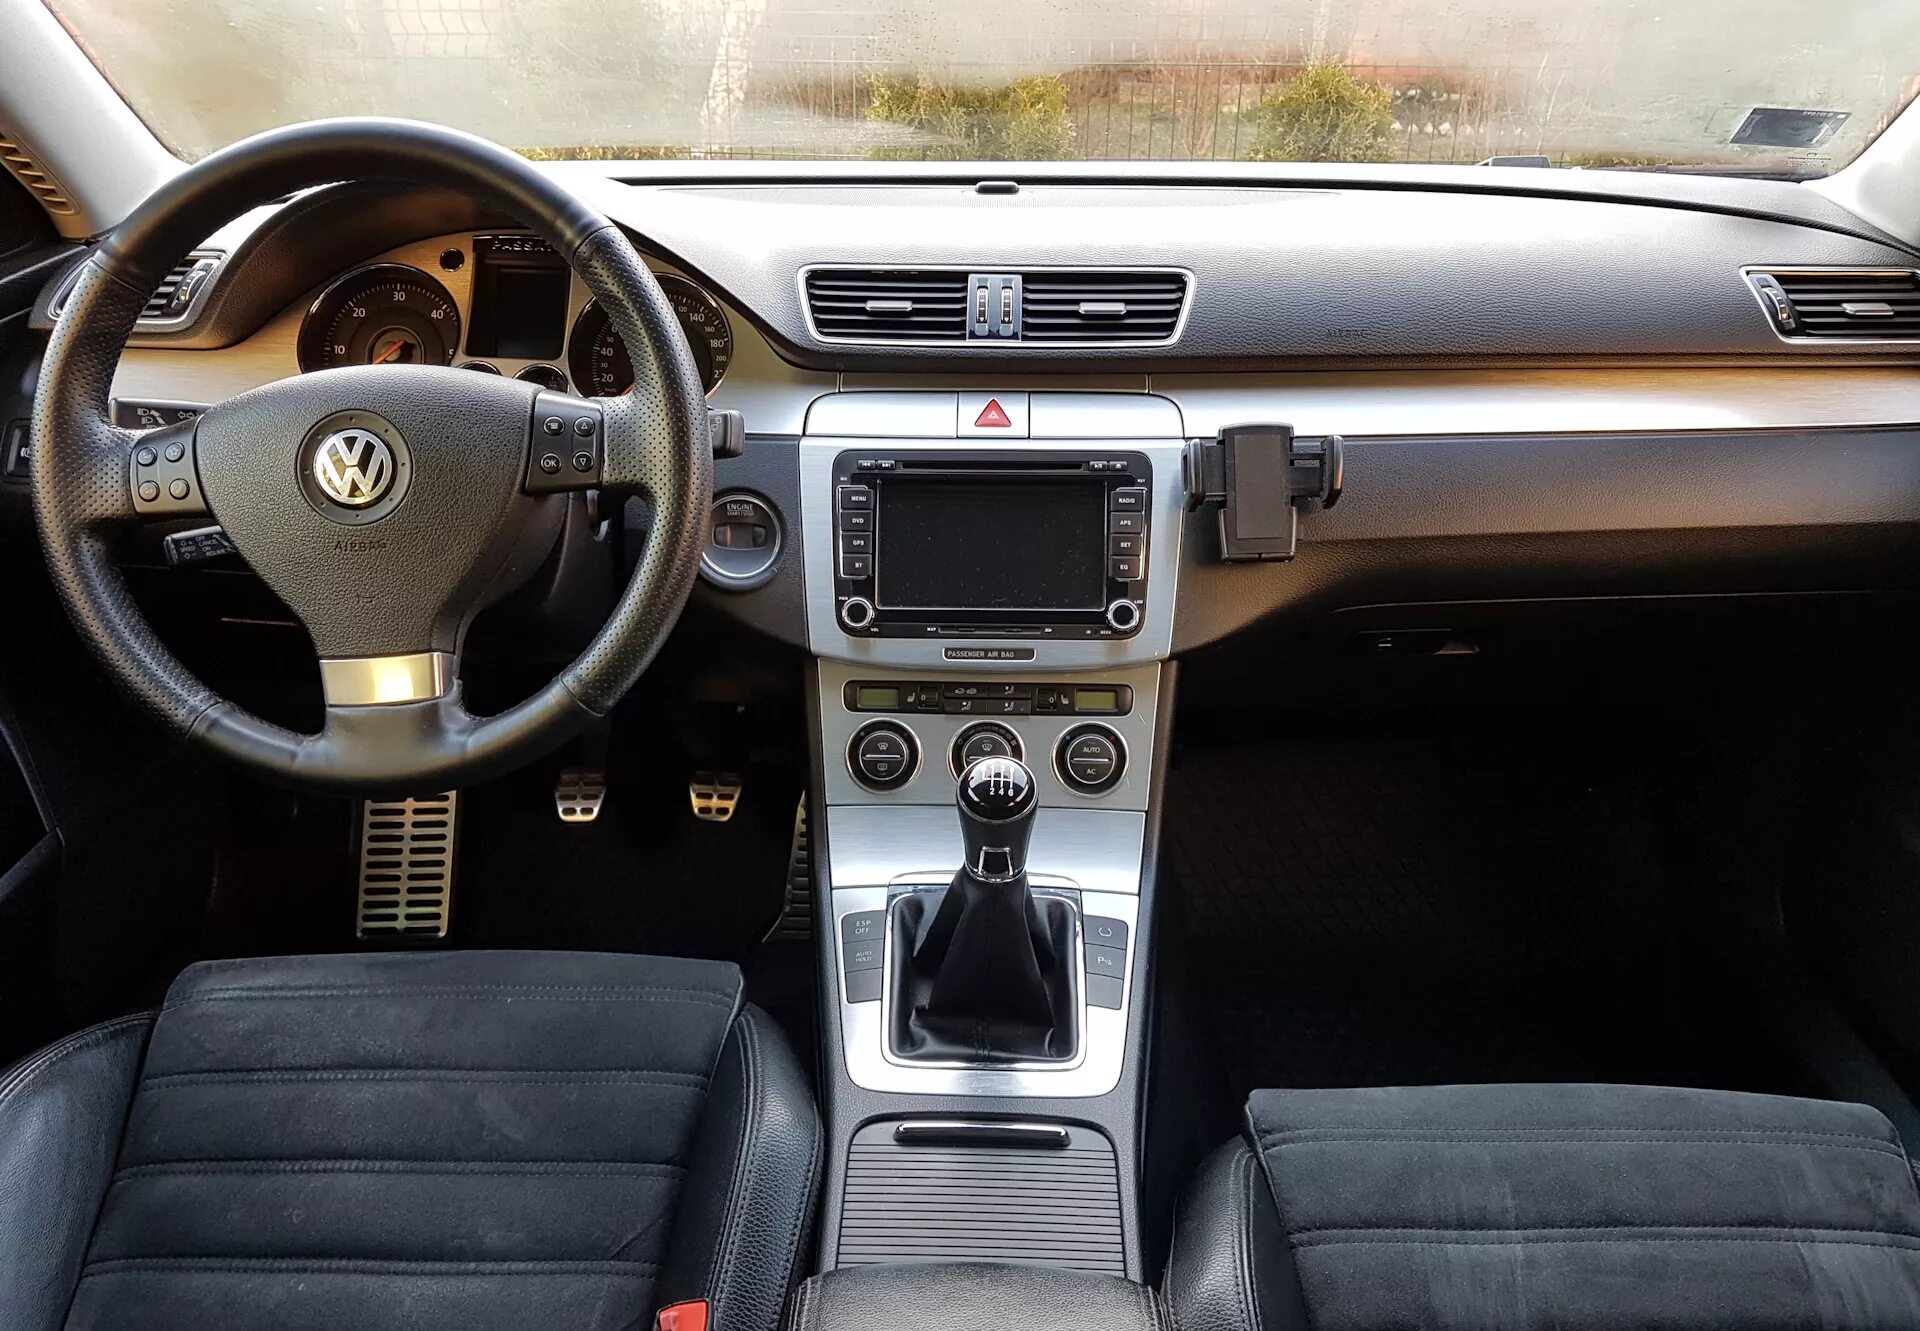 VW Passat b6 салон. Фольксваген Пассат б6 2008. WV Passat b6 салон. Volkswagen Passat b6 Interior.